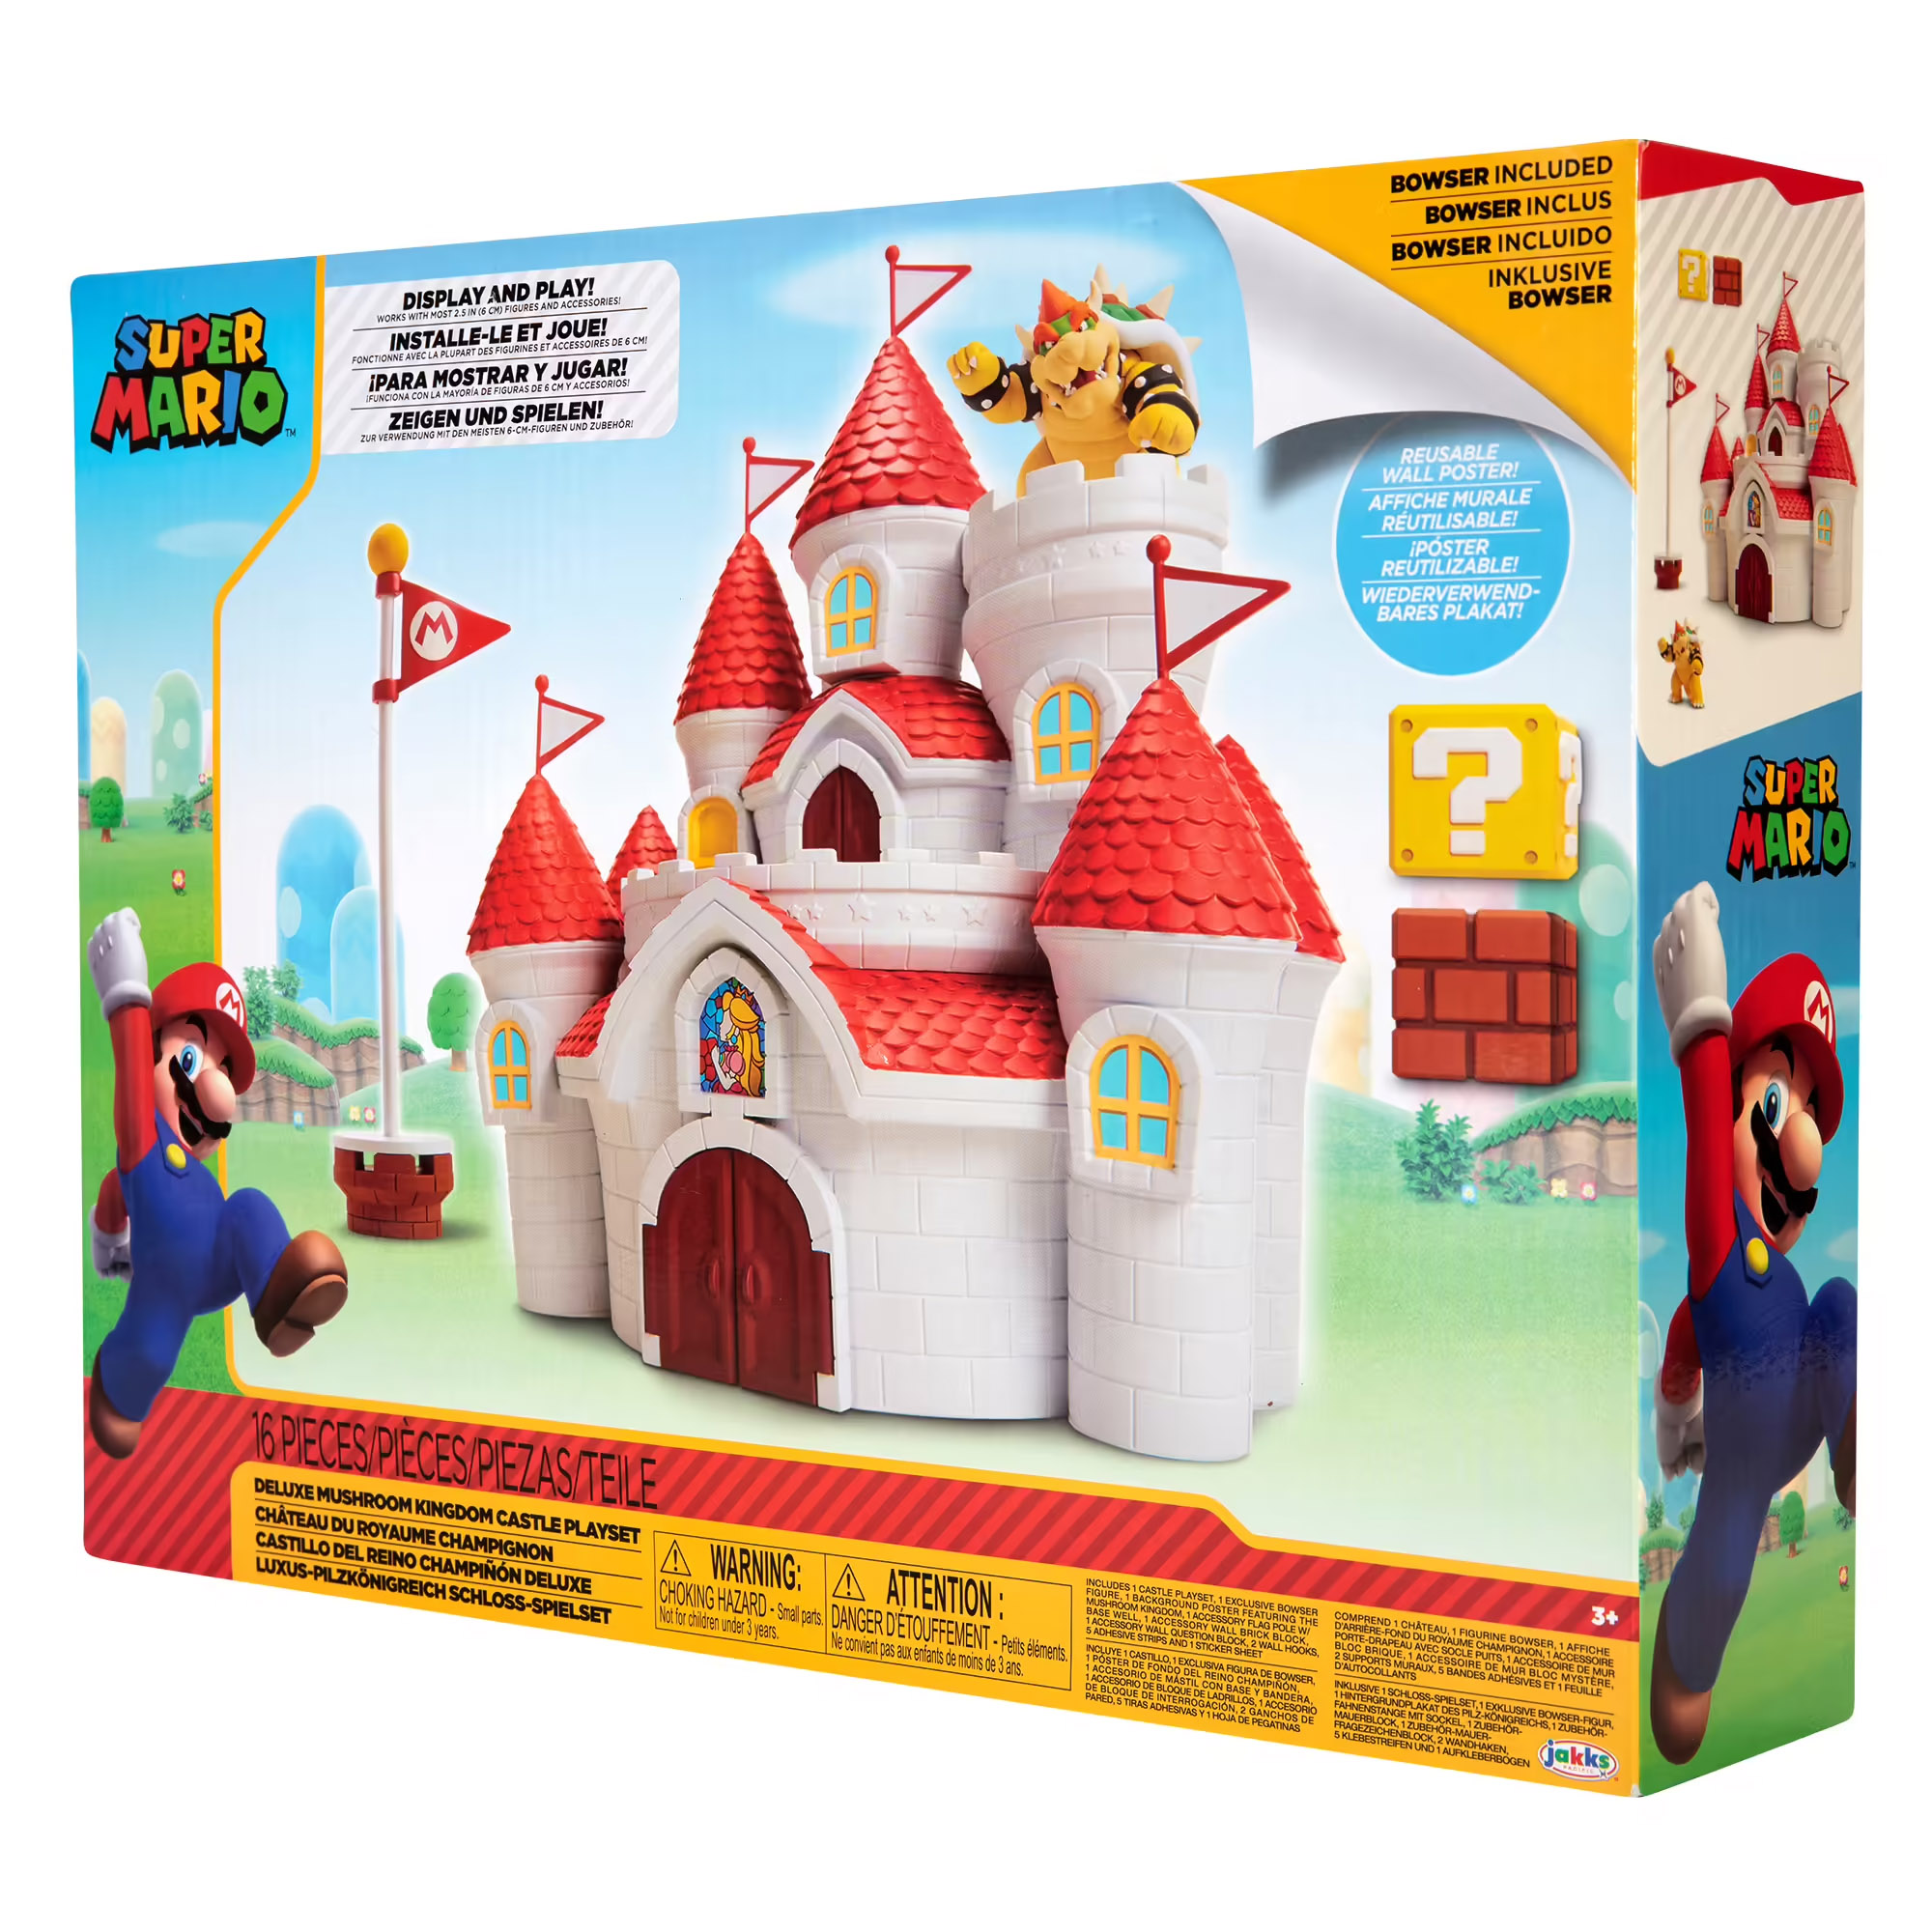 Super Mario Mushroom Kingdom Castle Playset - Super Mario